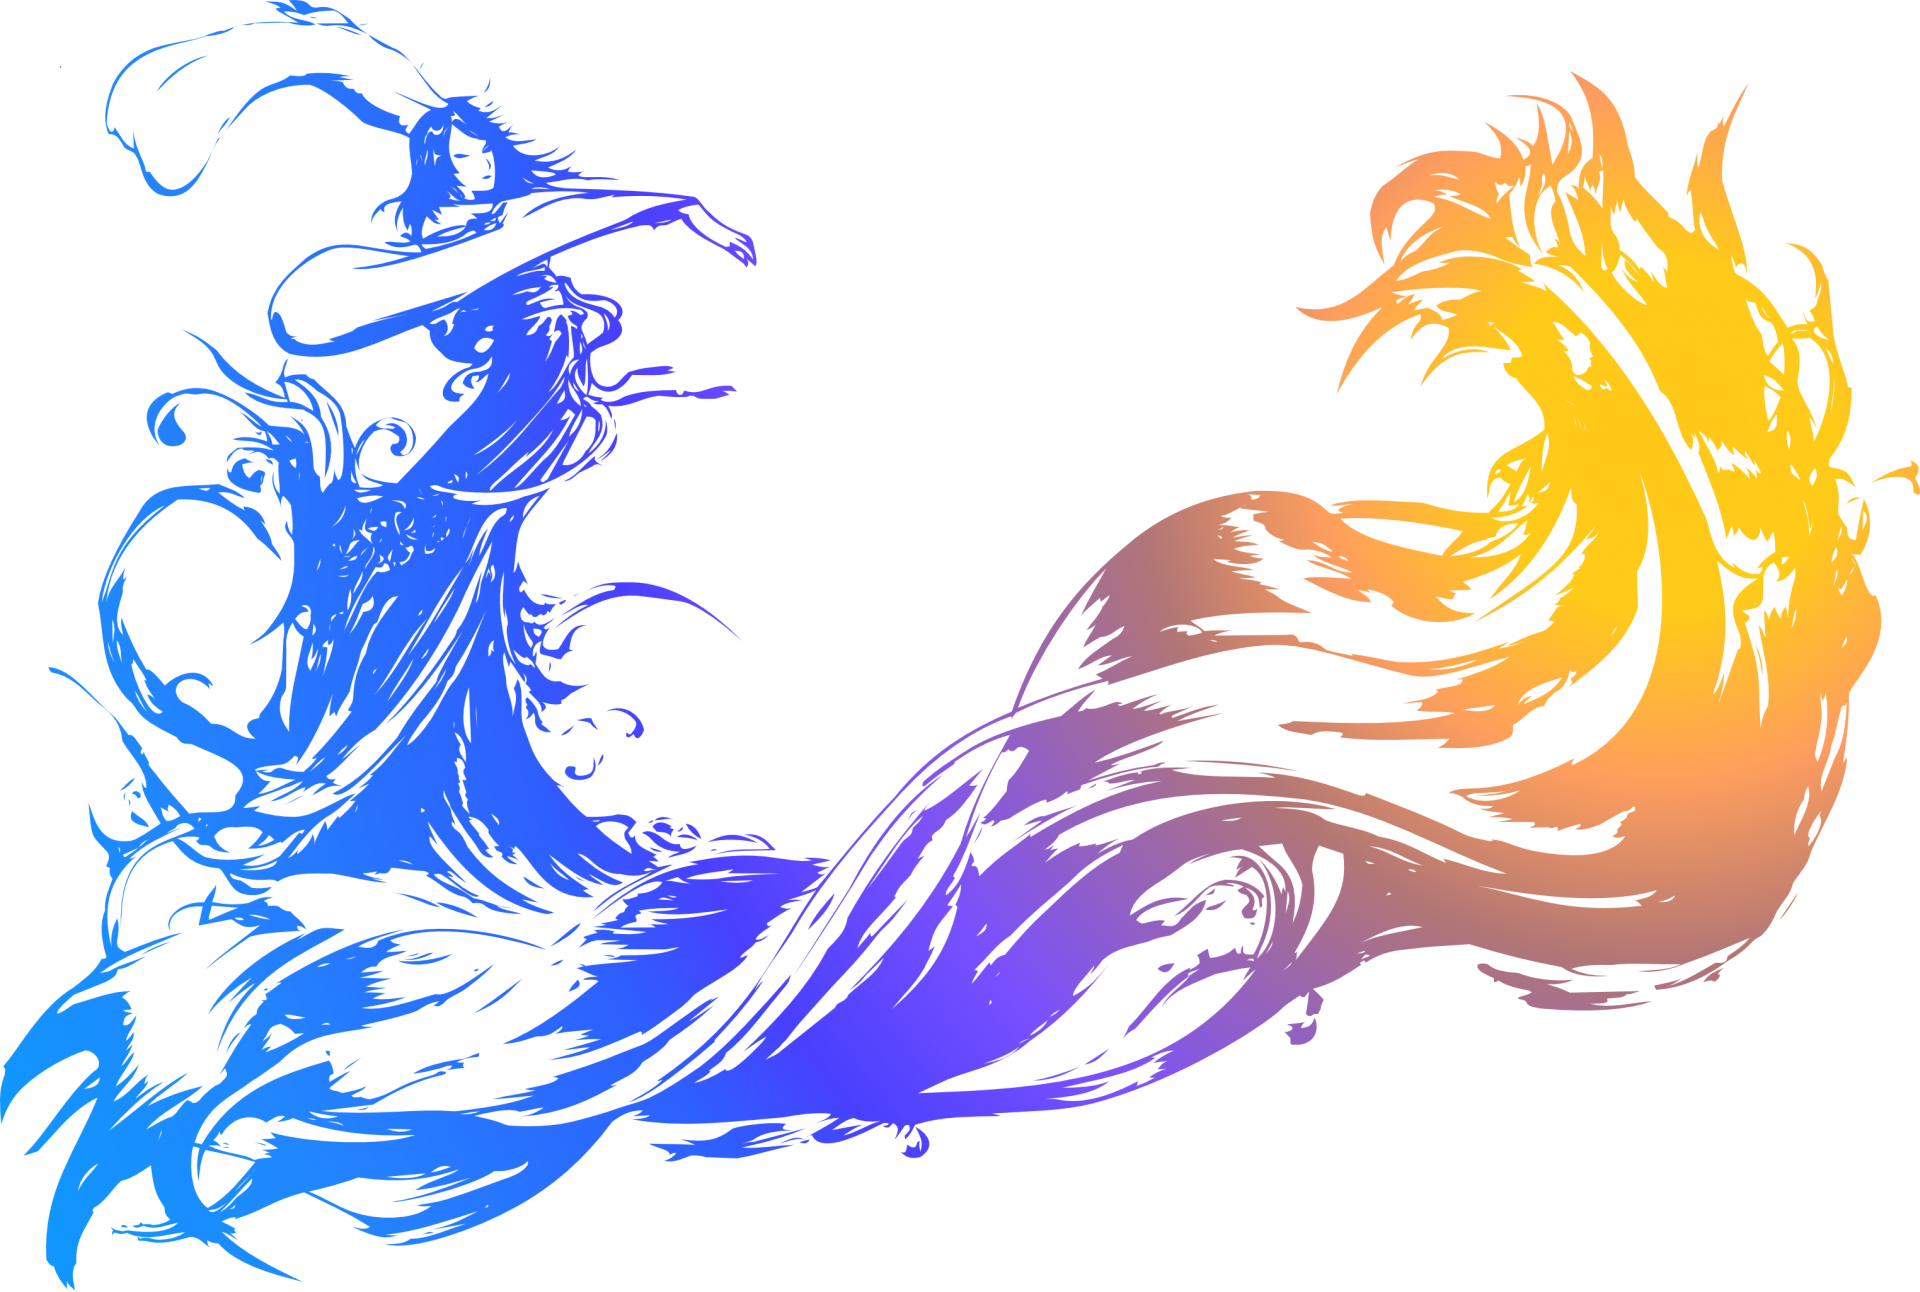  Final Fantasy  X Logo  Art HD Wallpaper  Background Image 